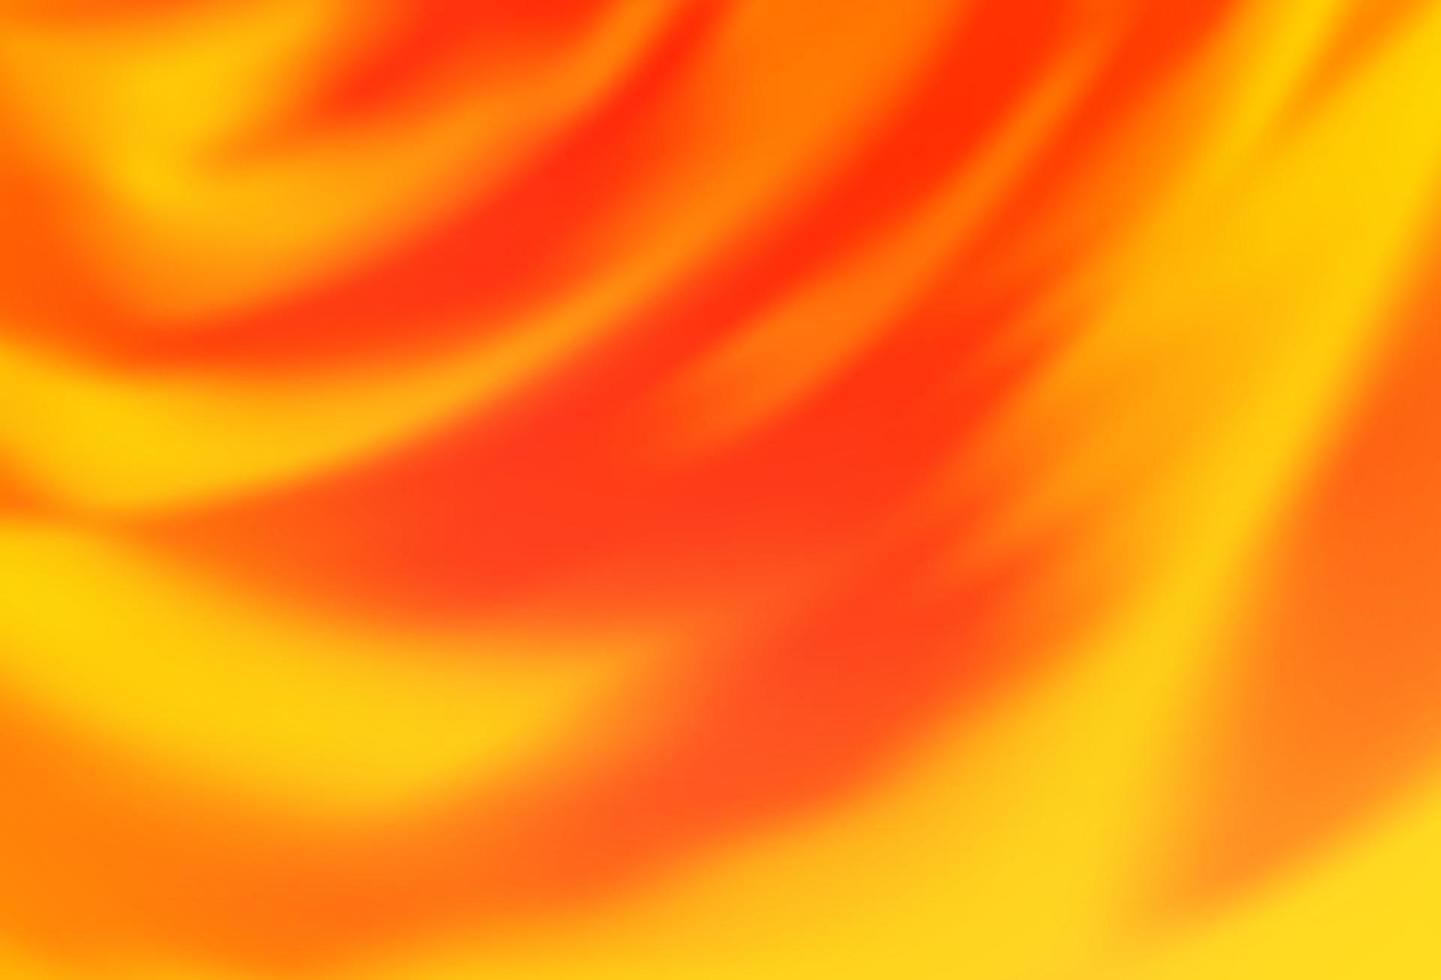 ljusgul, orange vektor suddigt ljust mönster.